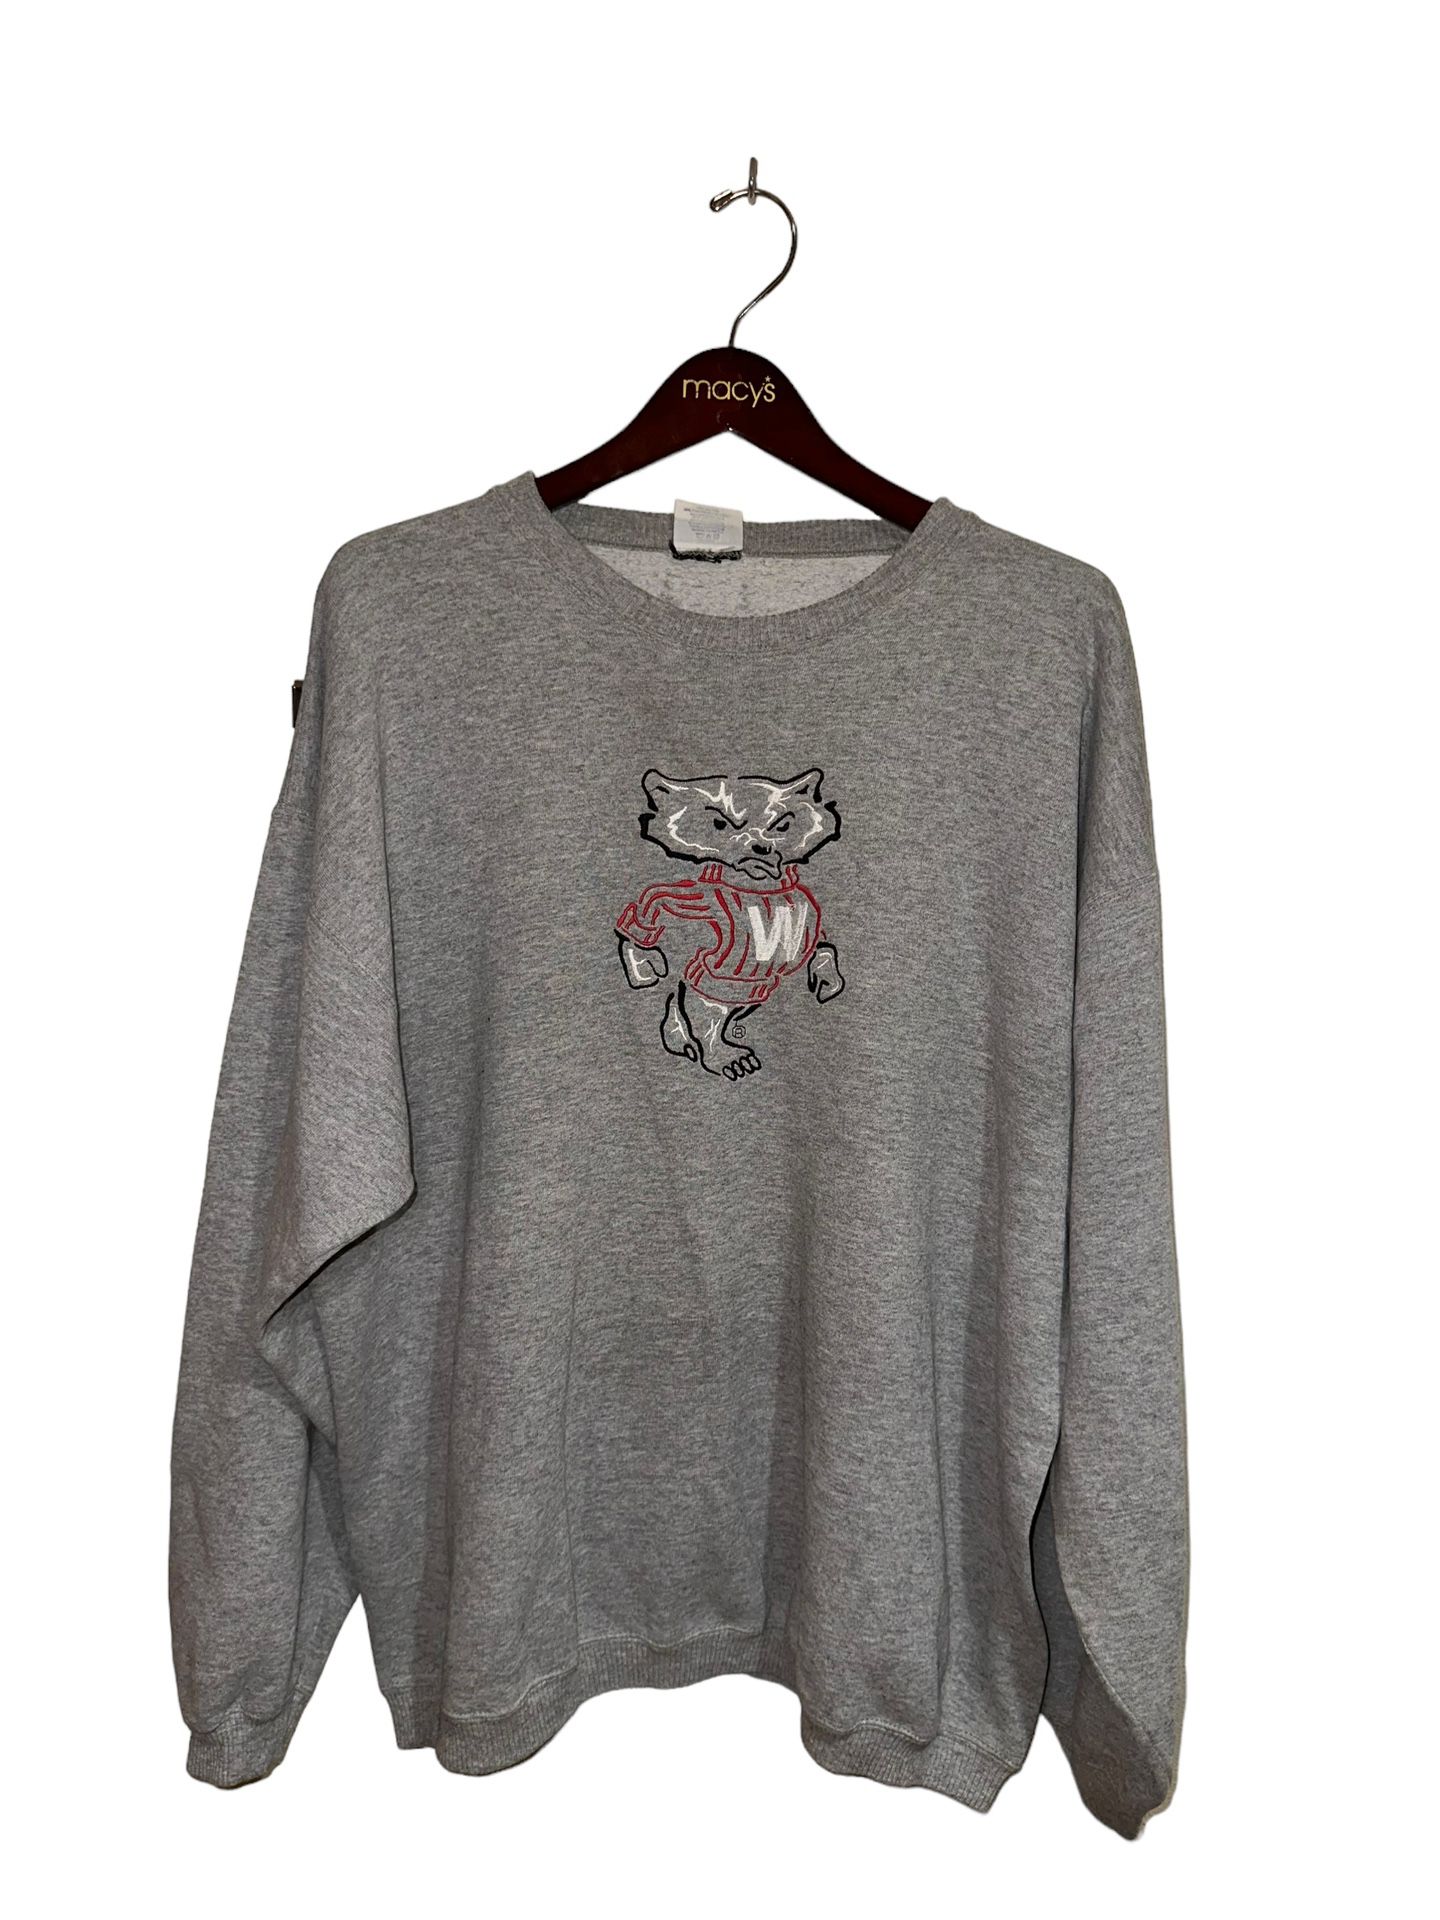 Wisconsin Badgers Bucky Badger Vintage Sweatshirt Size:X-Large